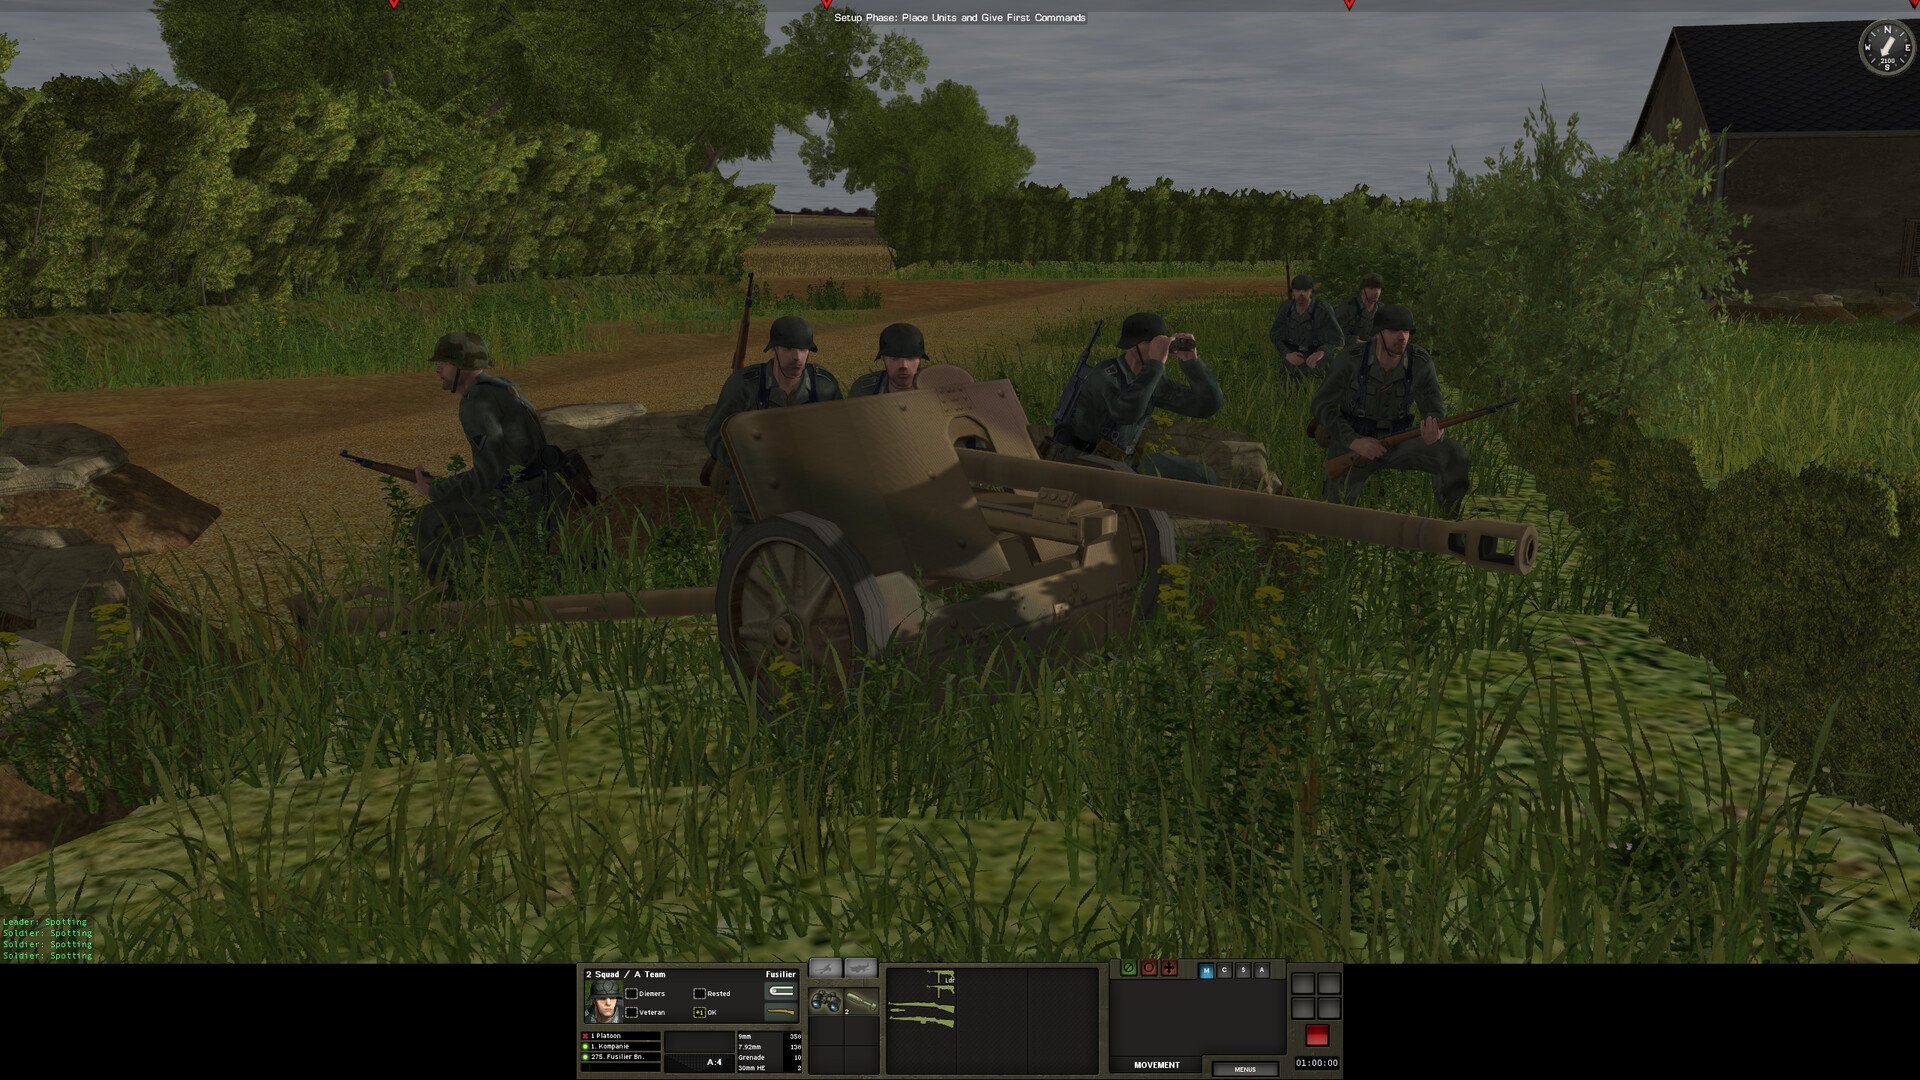 Combat Mission Battle for Normandy 4